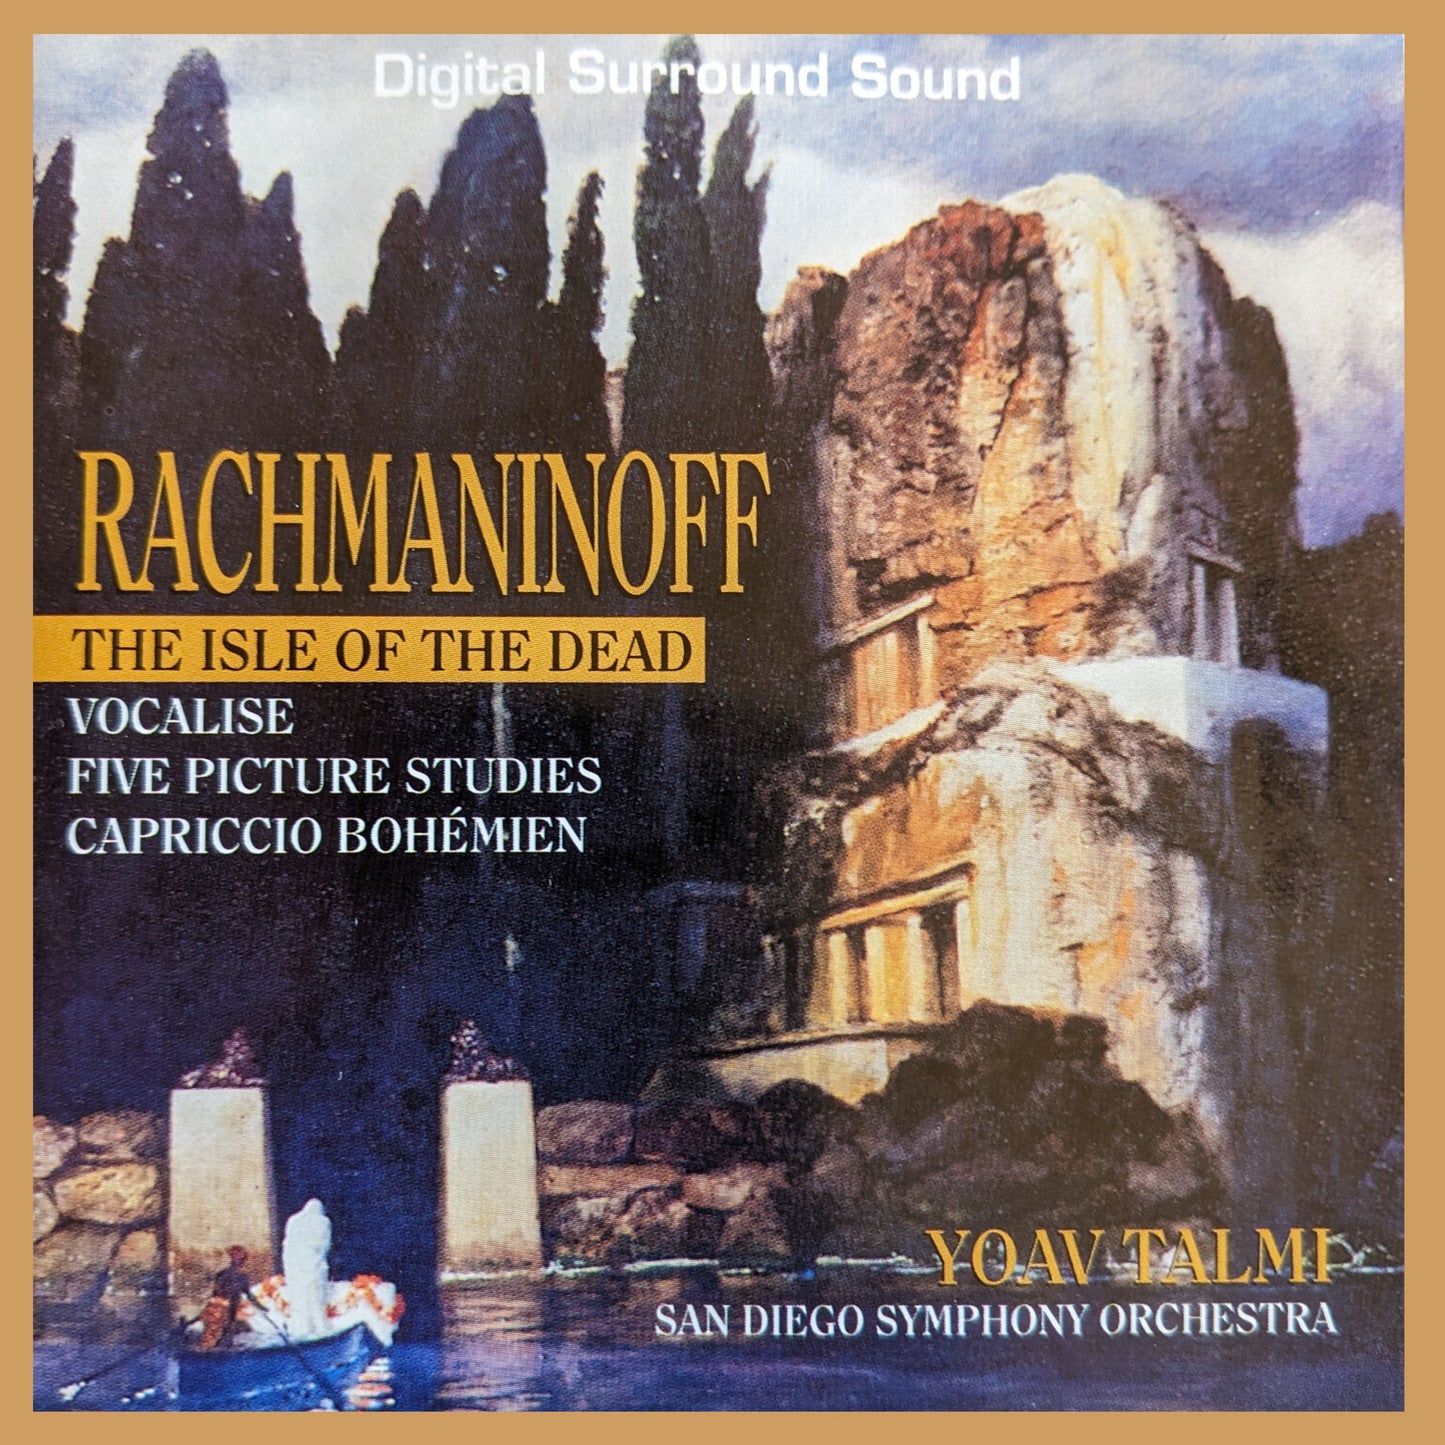 RACHMANINOFF: The Isle of the Dead, Five Picture Studies, Vocalise, Capriccio Bohemian - San Diego Symphony Orchestra, Yoav Talmi (DIGITAL DOWNLOAD)